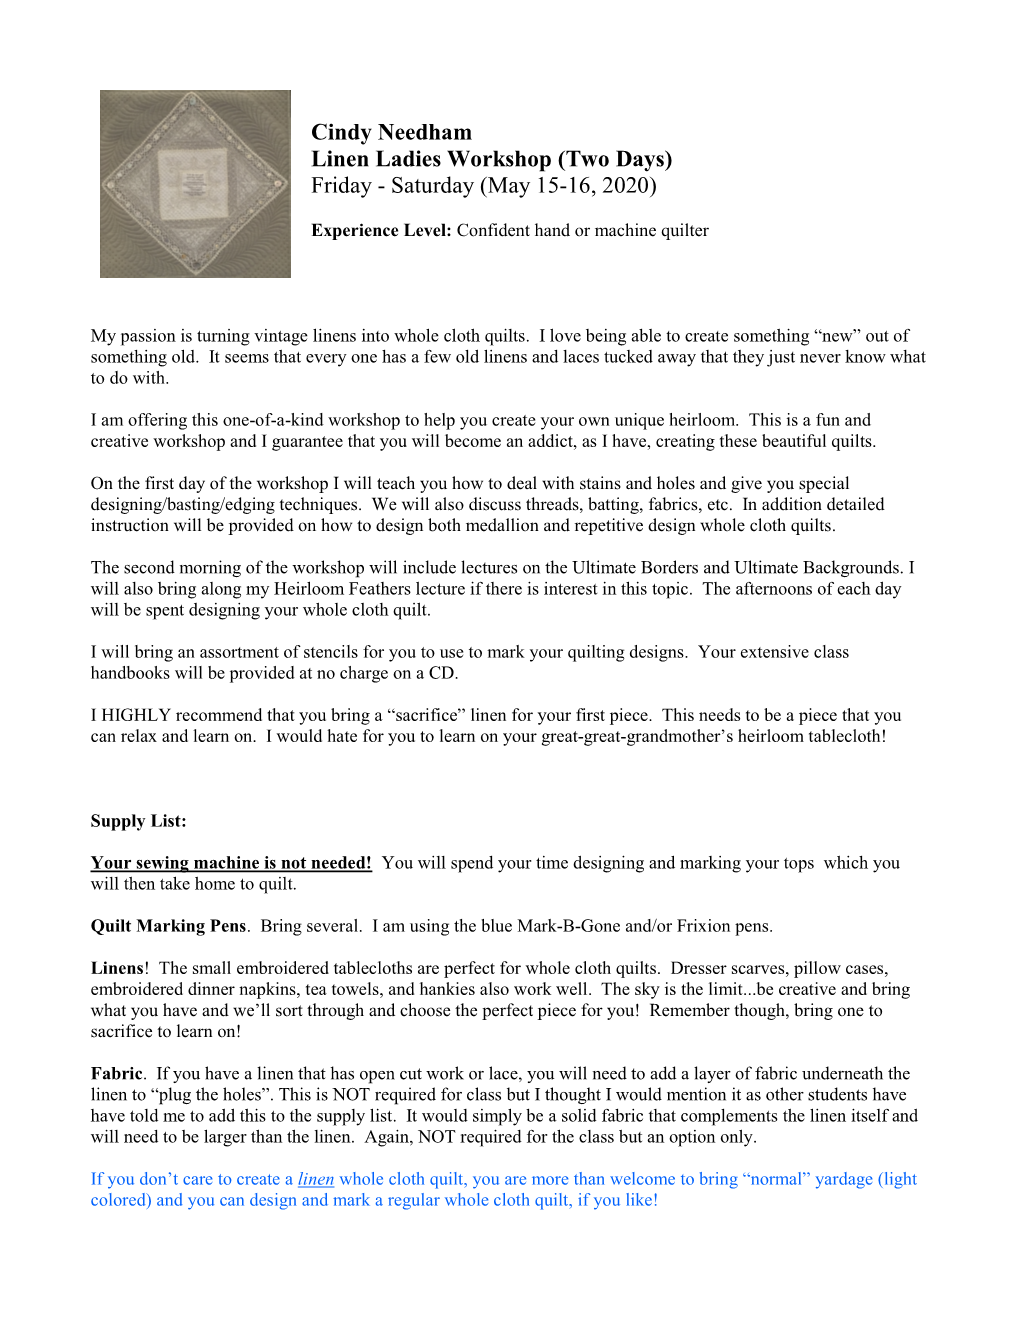 Cindy Needham Linen Ladies Workshop (Two Days) Friday - Saturday (May 15-16, 2020)